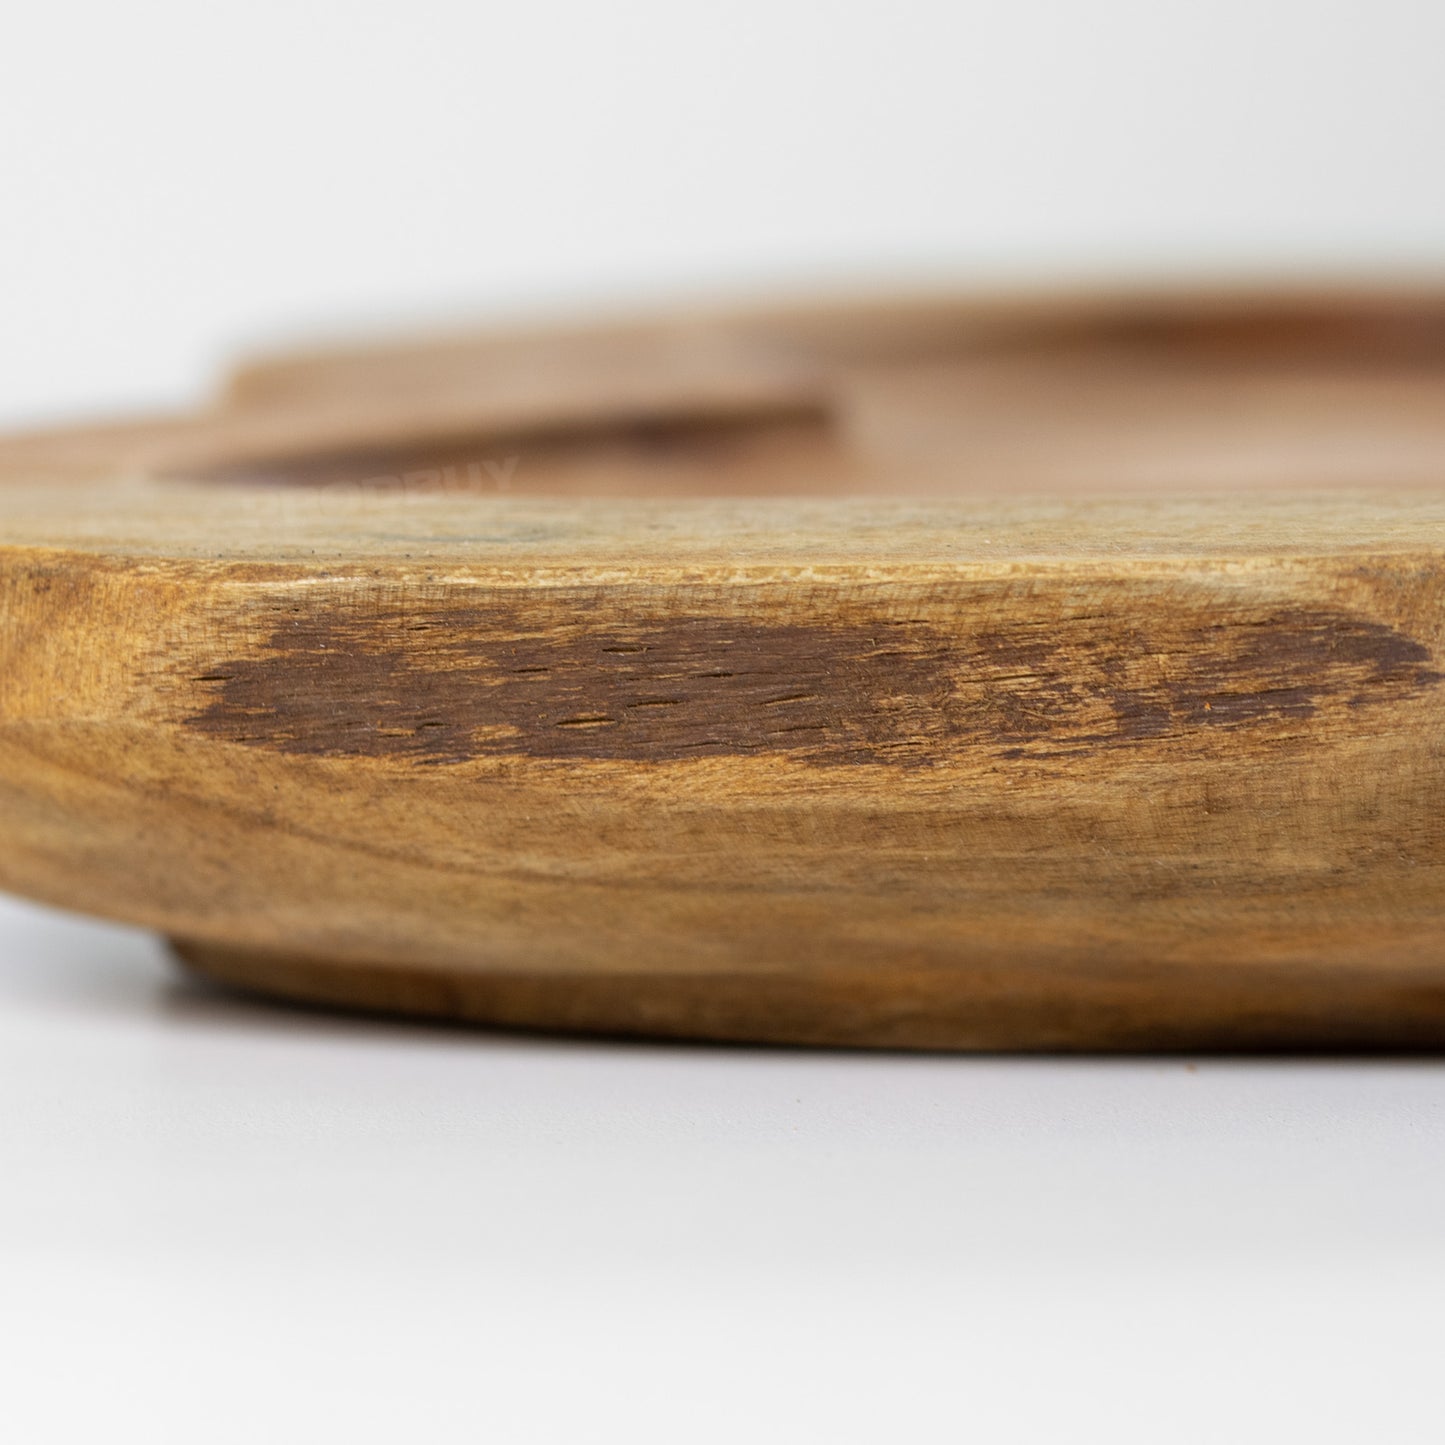 Heart Shape Teak Root Wood Serving Plate